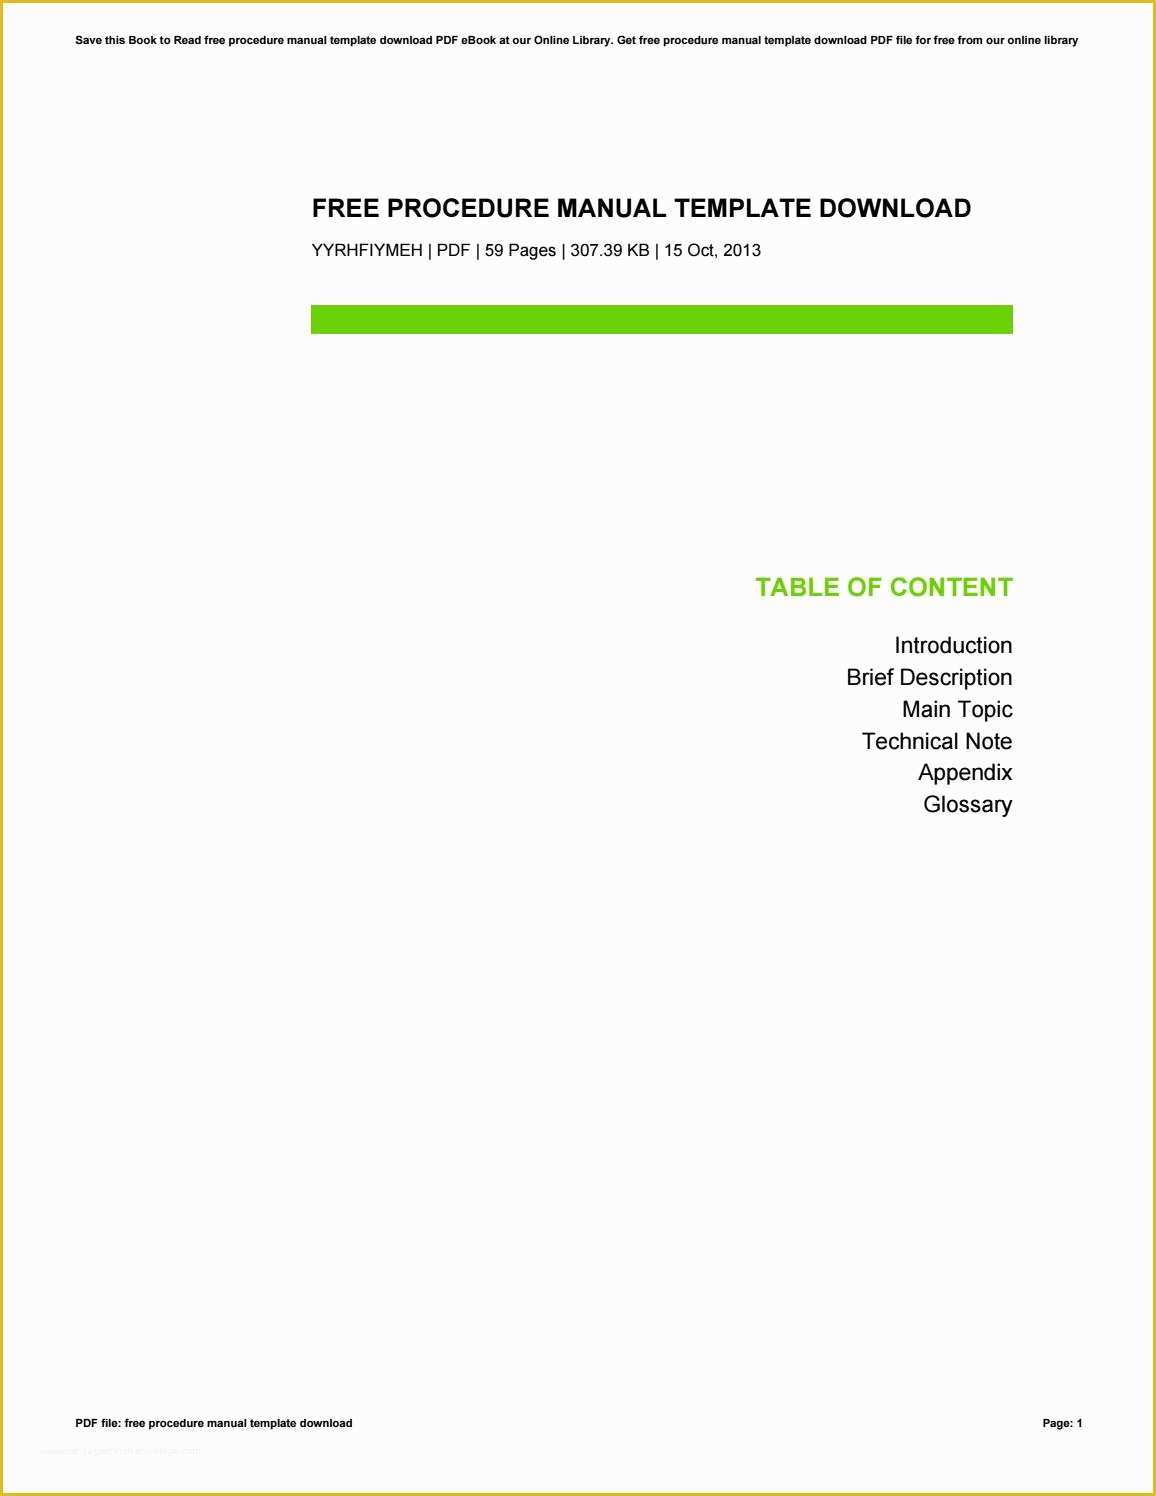 Procedure Manual Template Free Download Of Free Procedure Manual Template by Ruthbeard2523